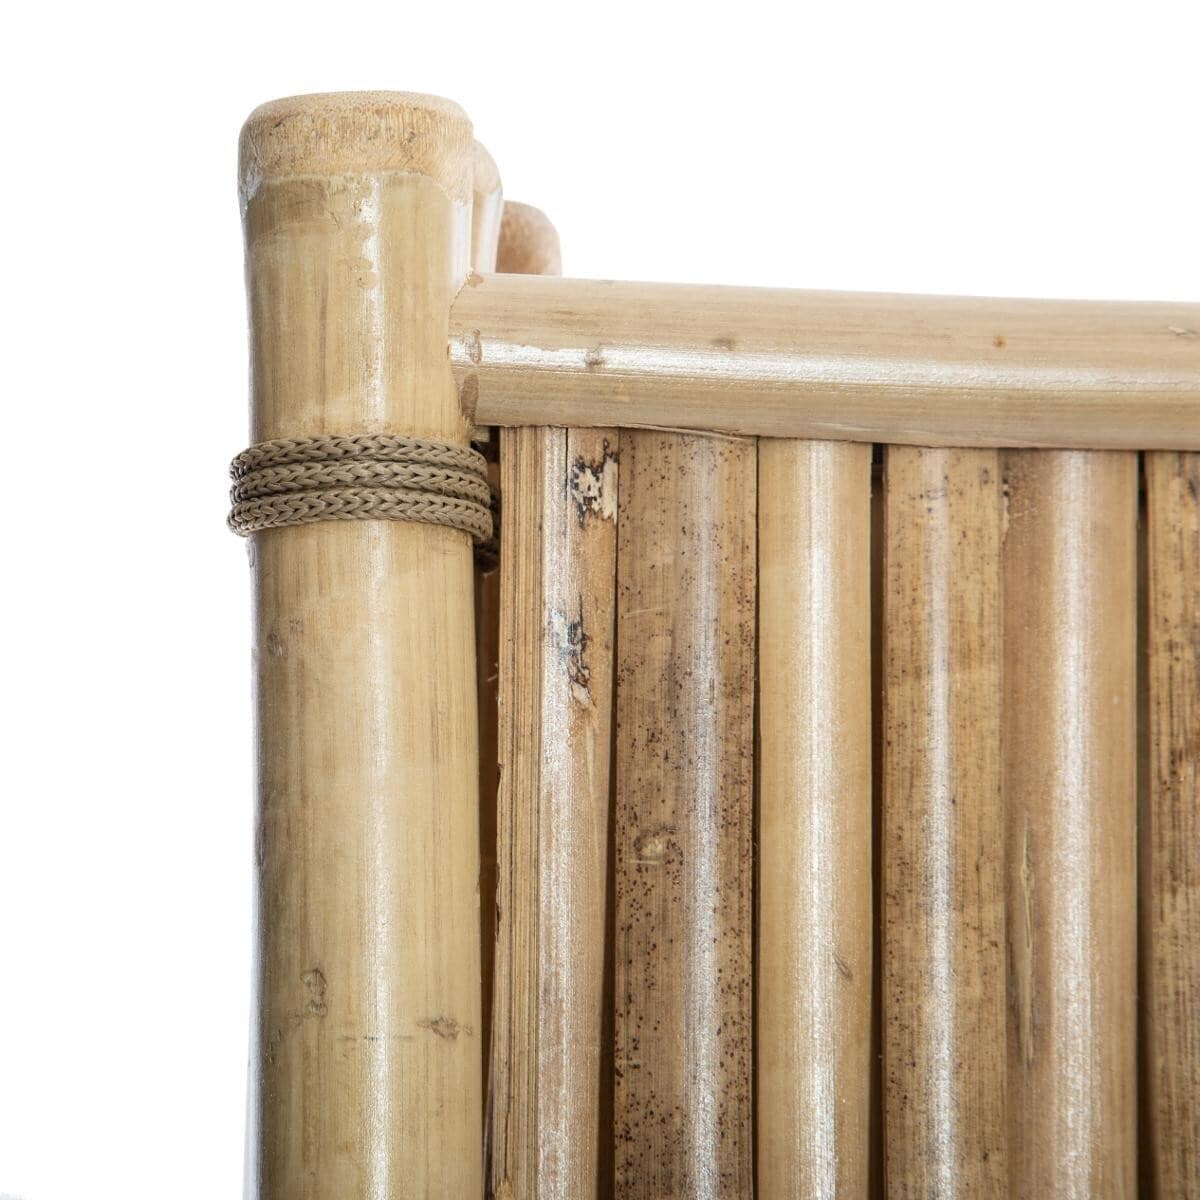 Biombo de madera y bambu marron - 5 paneles